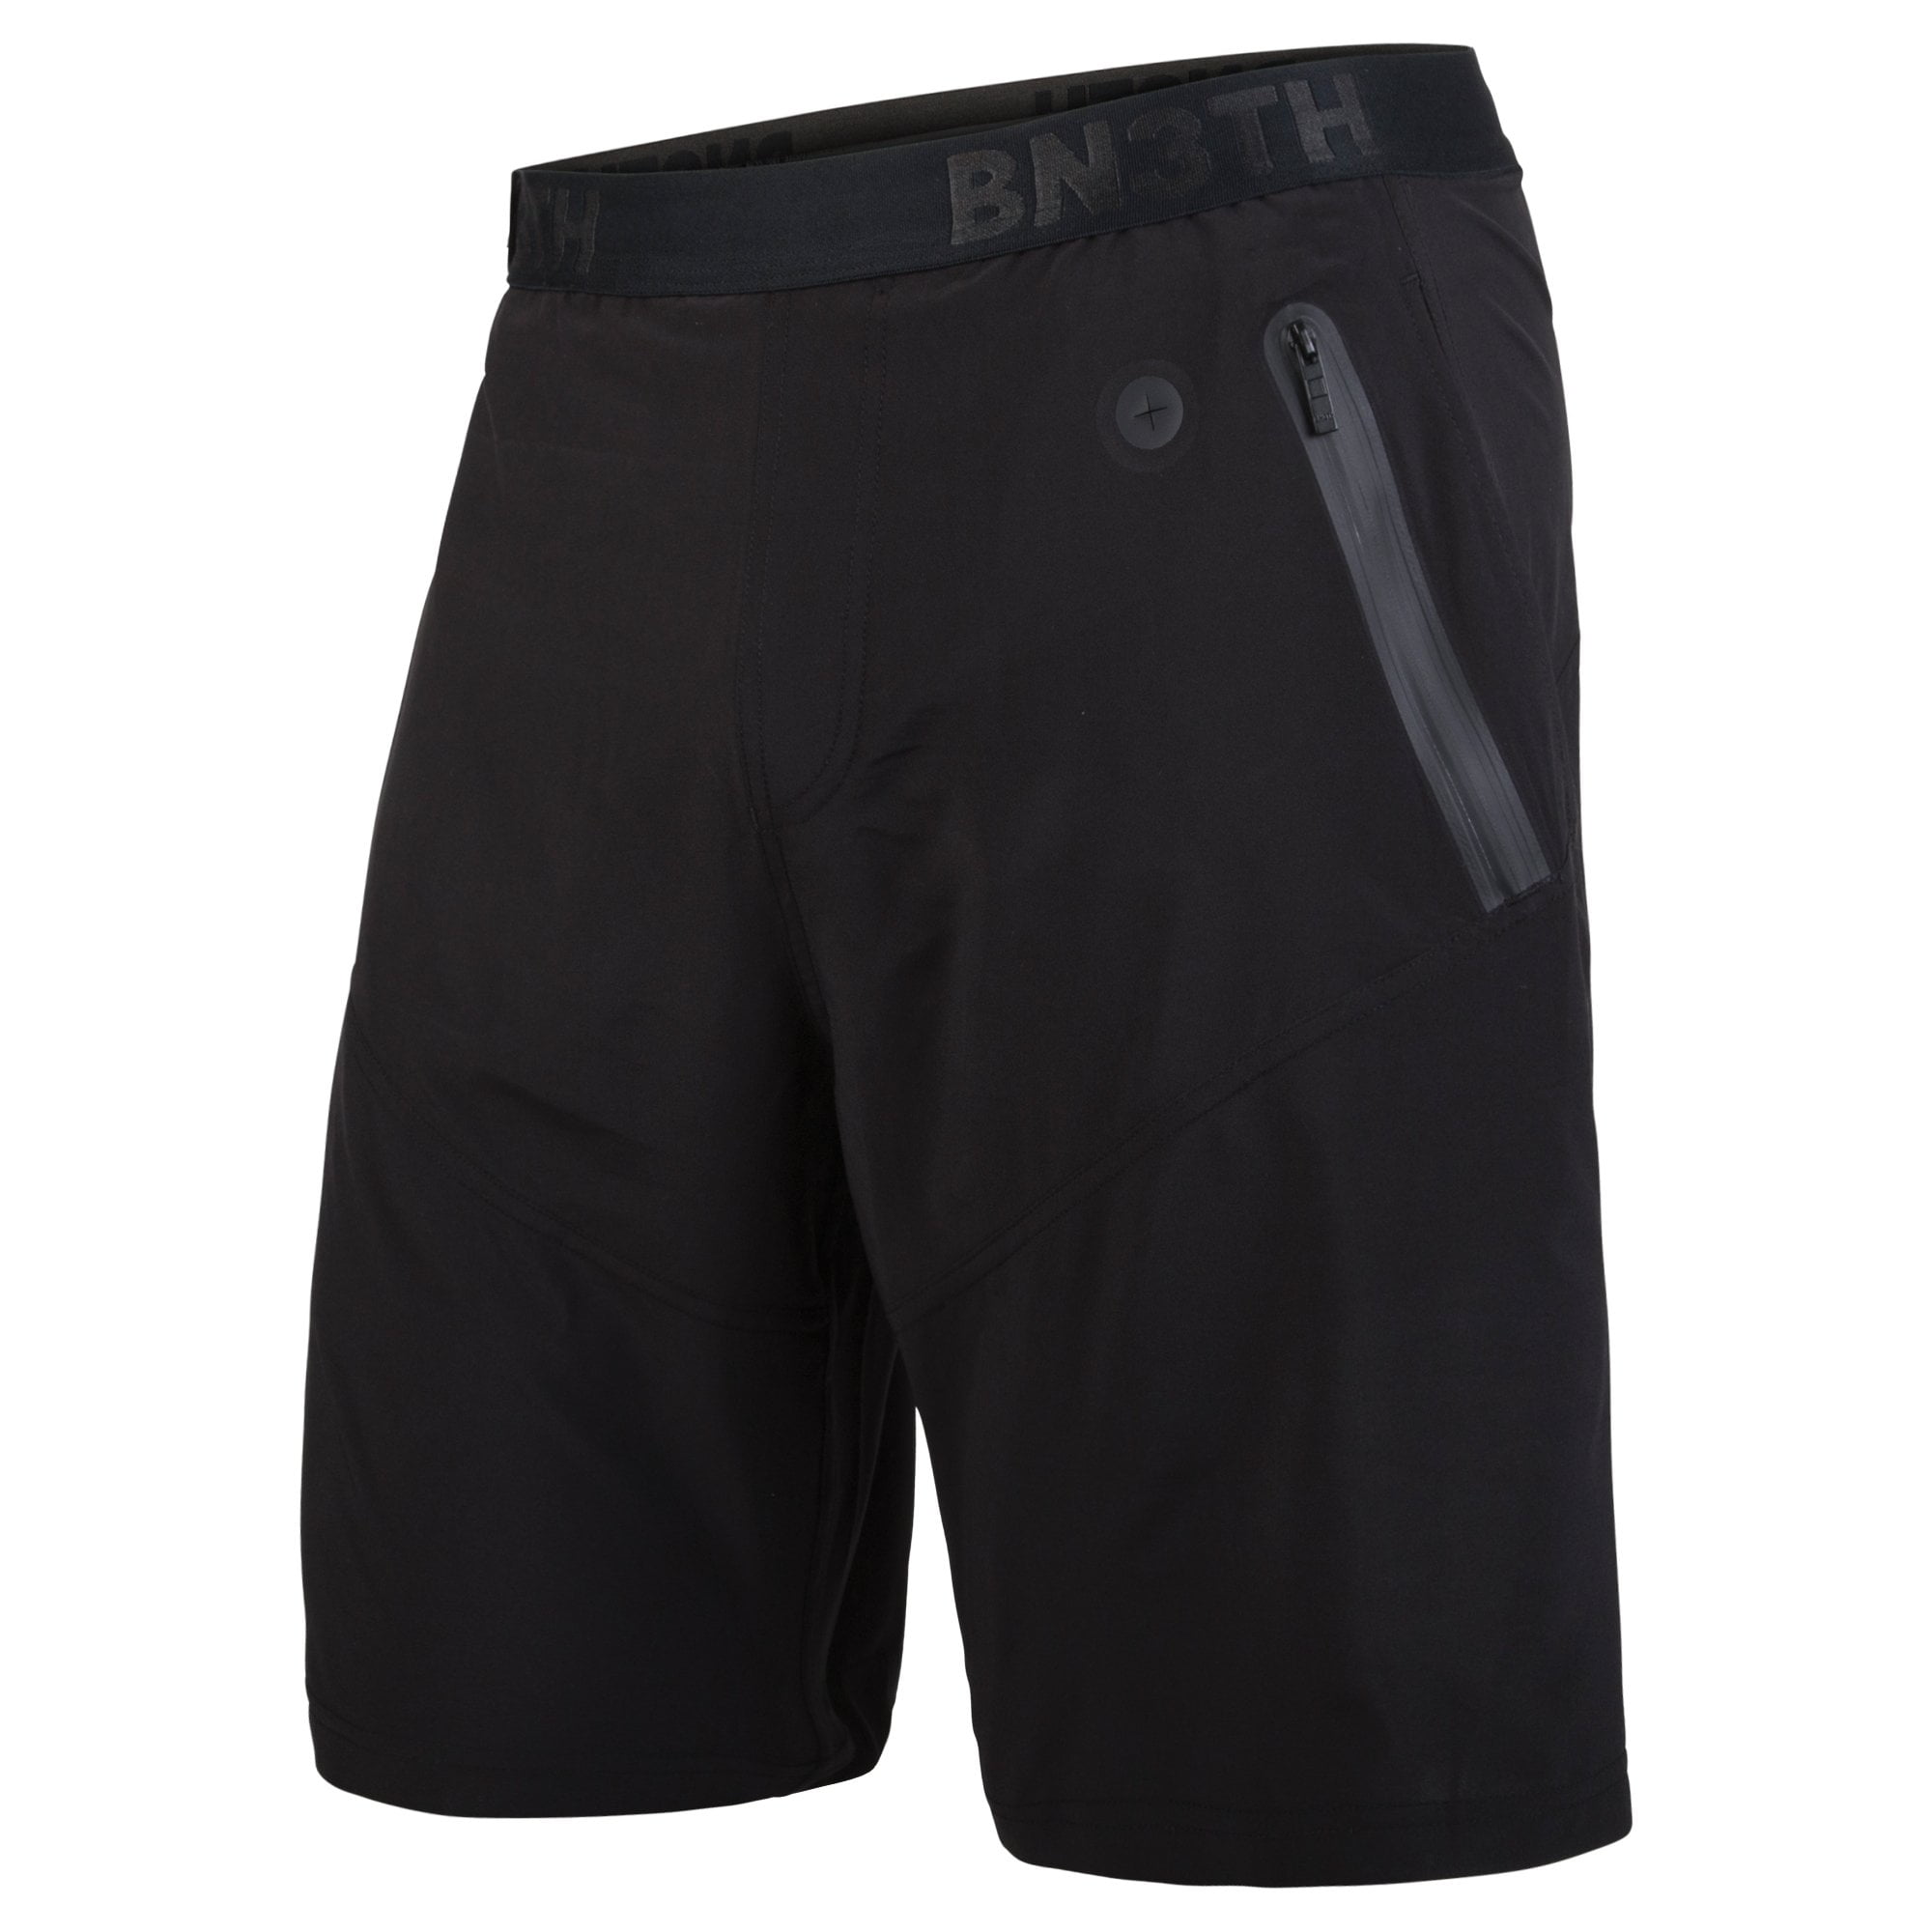 BN3TH Men's Pro 2n1 Shorts (X-Small, Black) - Walmart.com